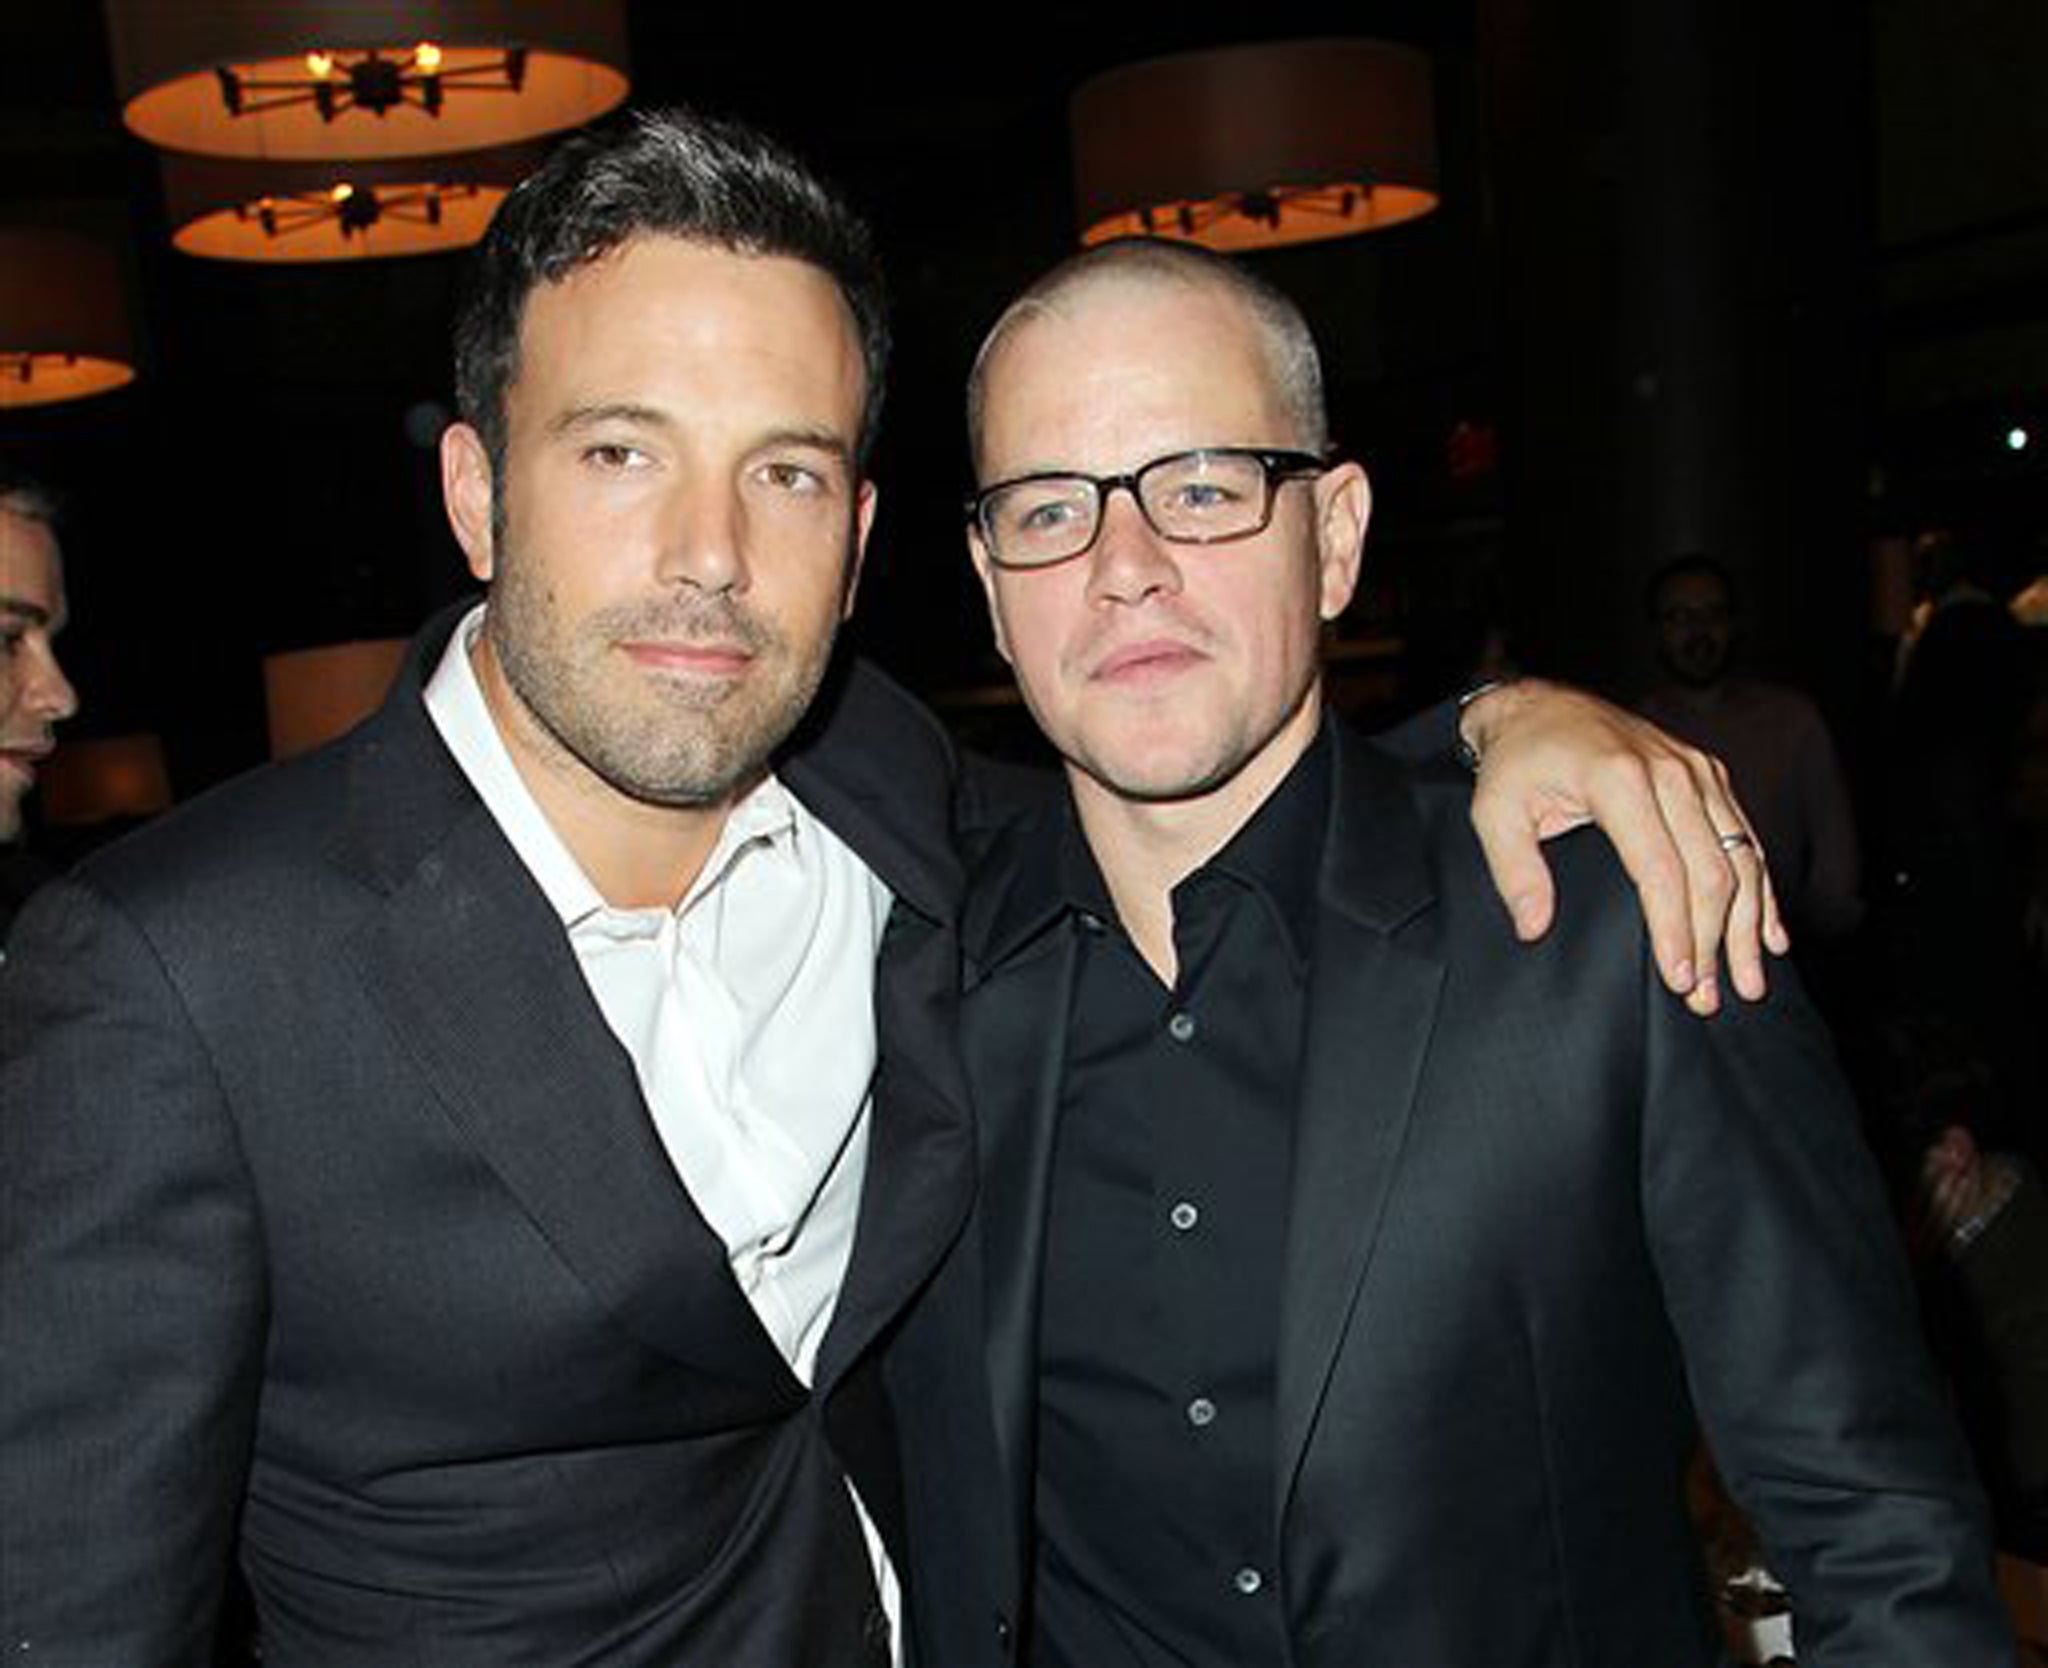 Ben Affleck and Matt Damon at the premiere of Affleck's film Argo